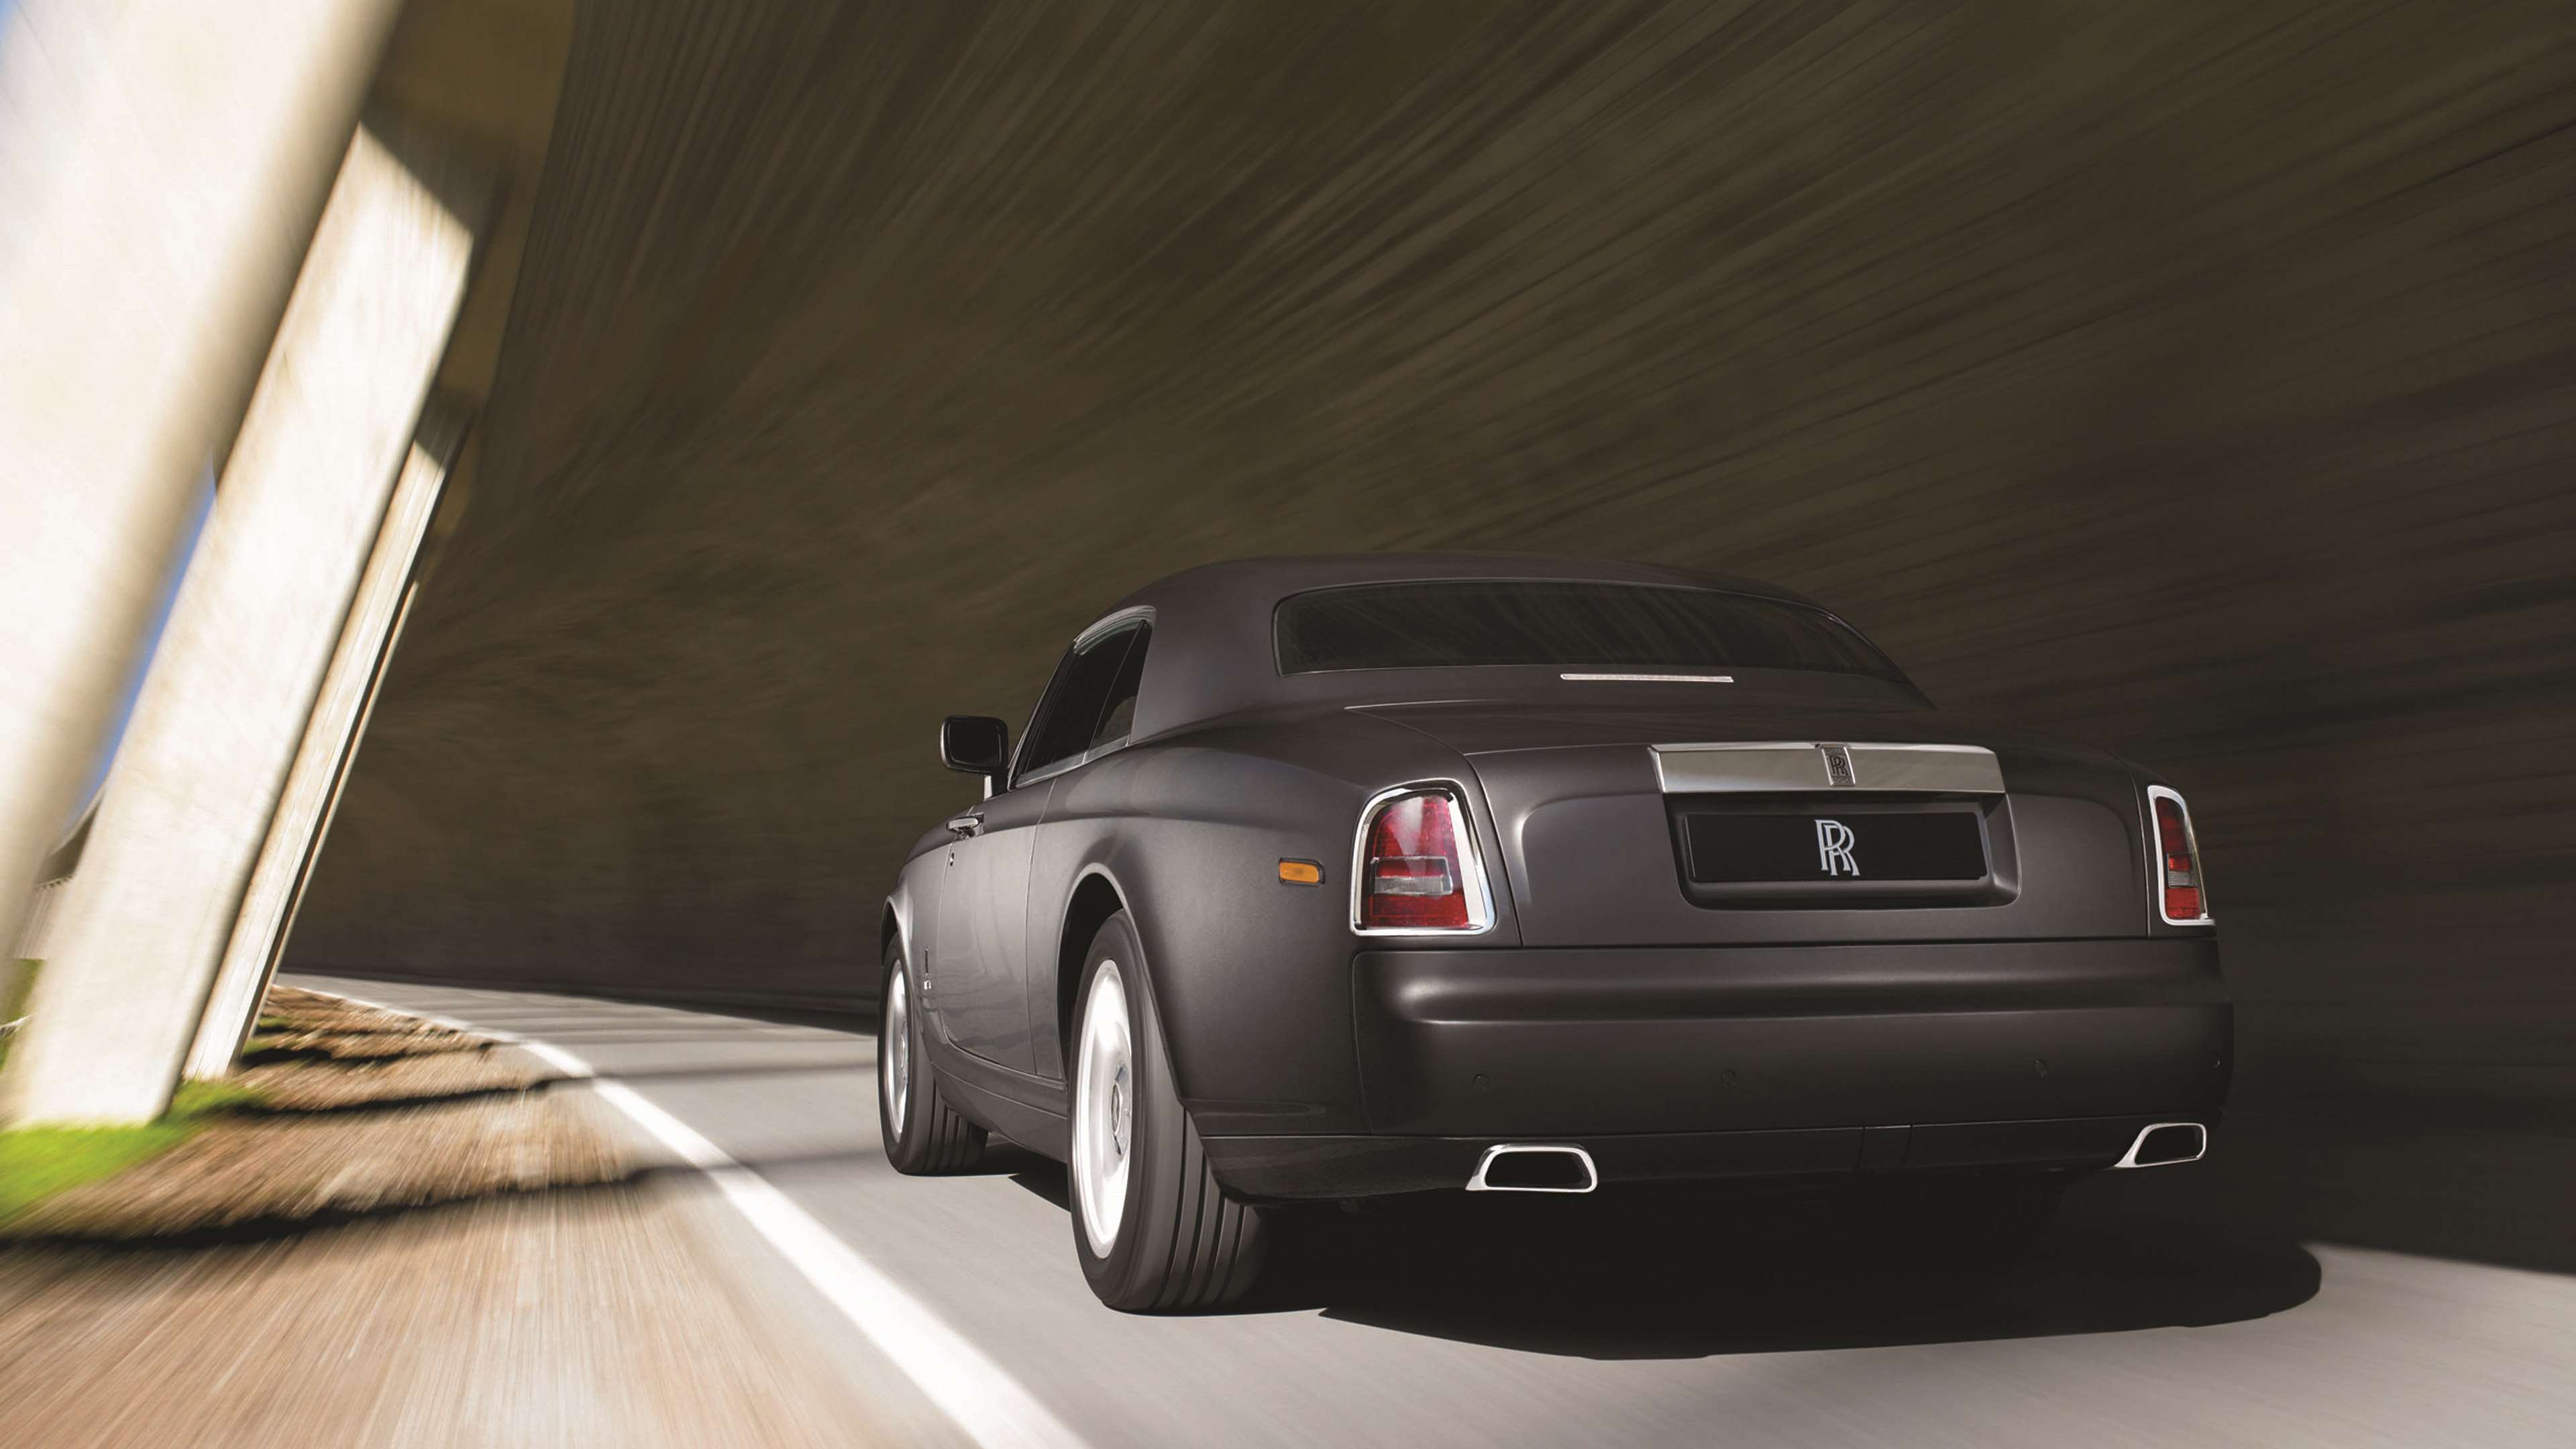  2009 Rolls-Royce Phantom Coupe Wallpaper.